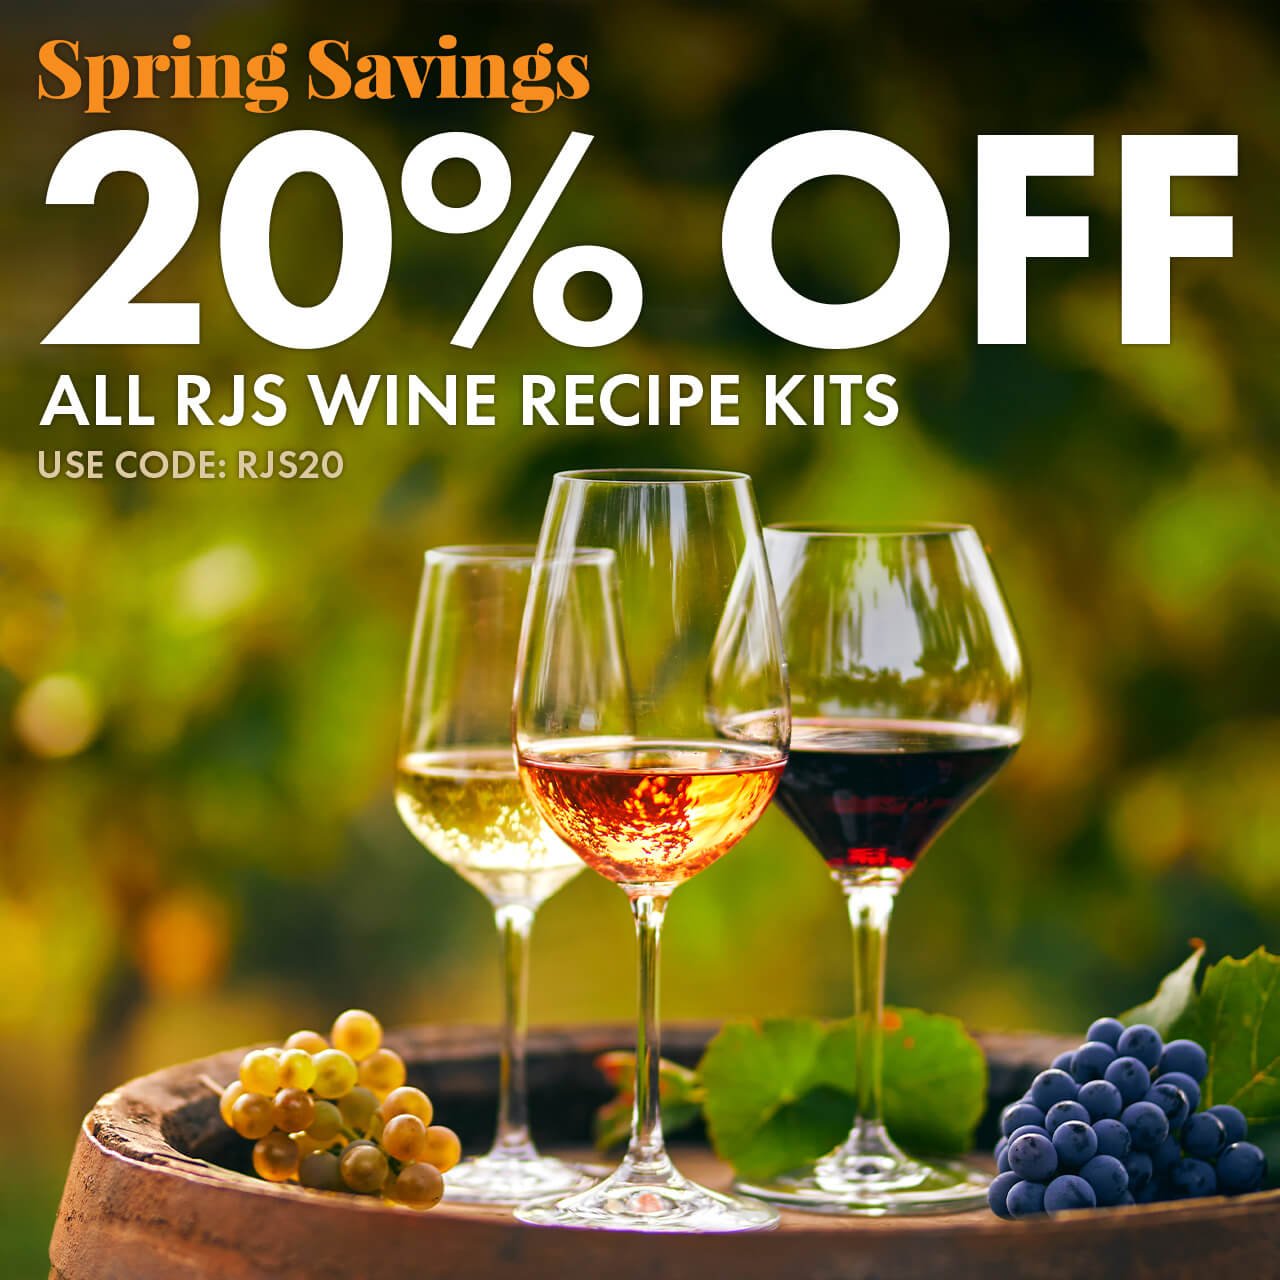 Spring Savings. 20% Off All RJS Wine Recipe Kits. Use code RJS20